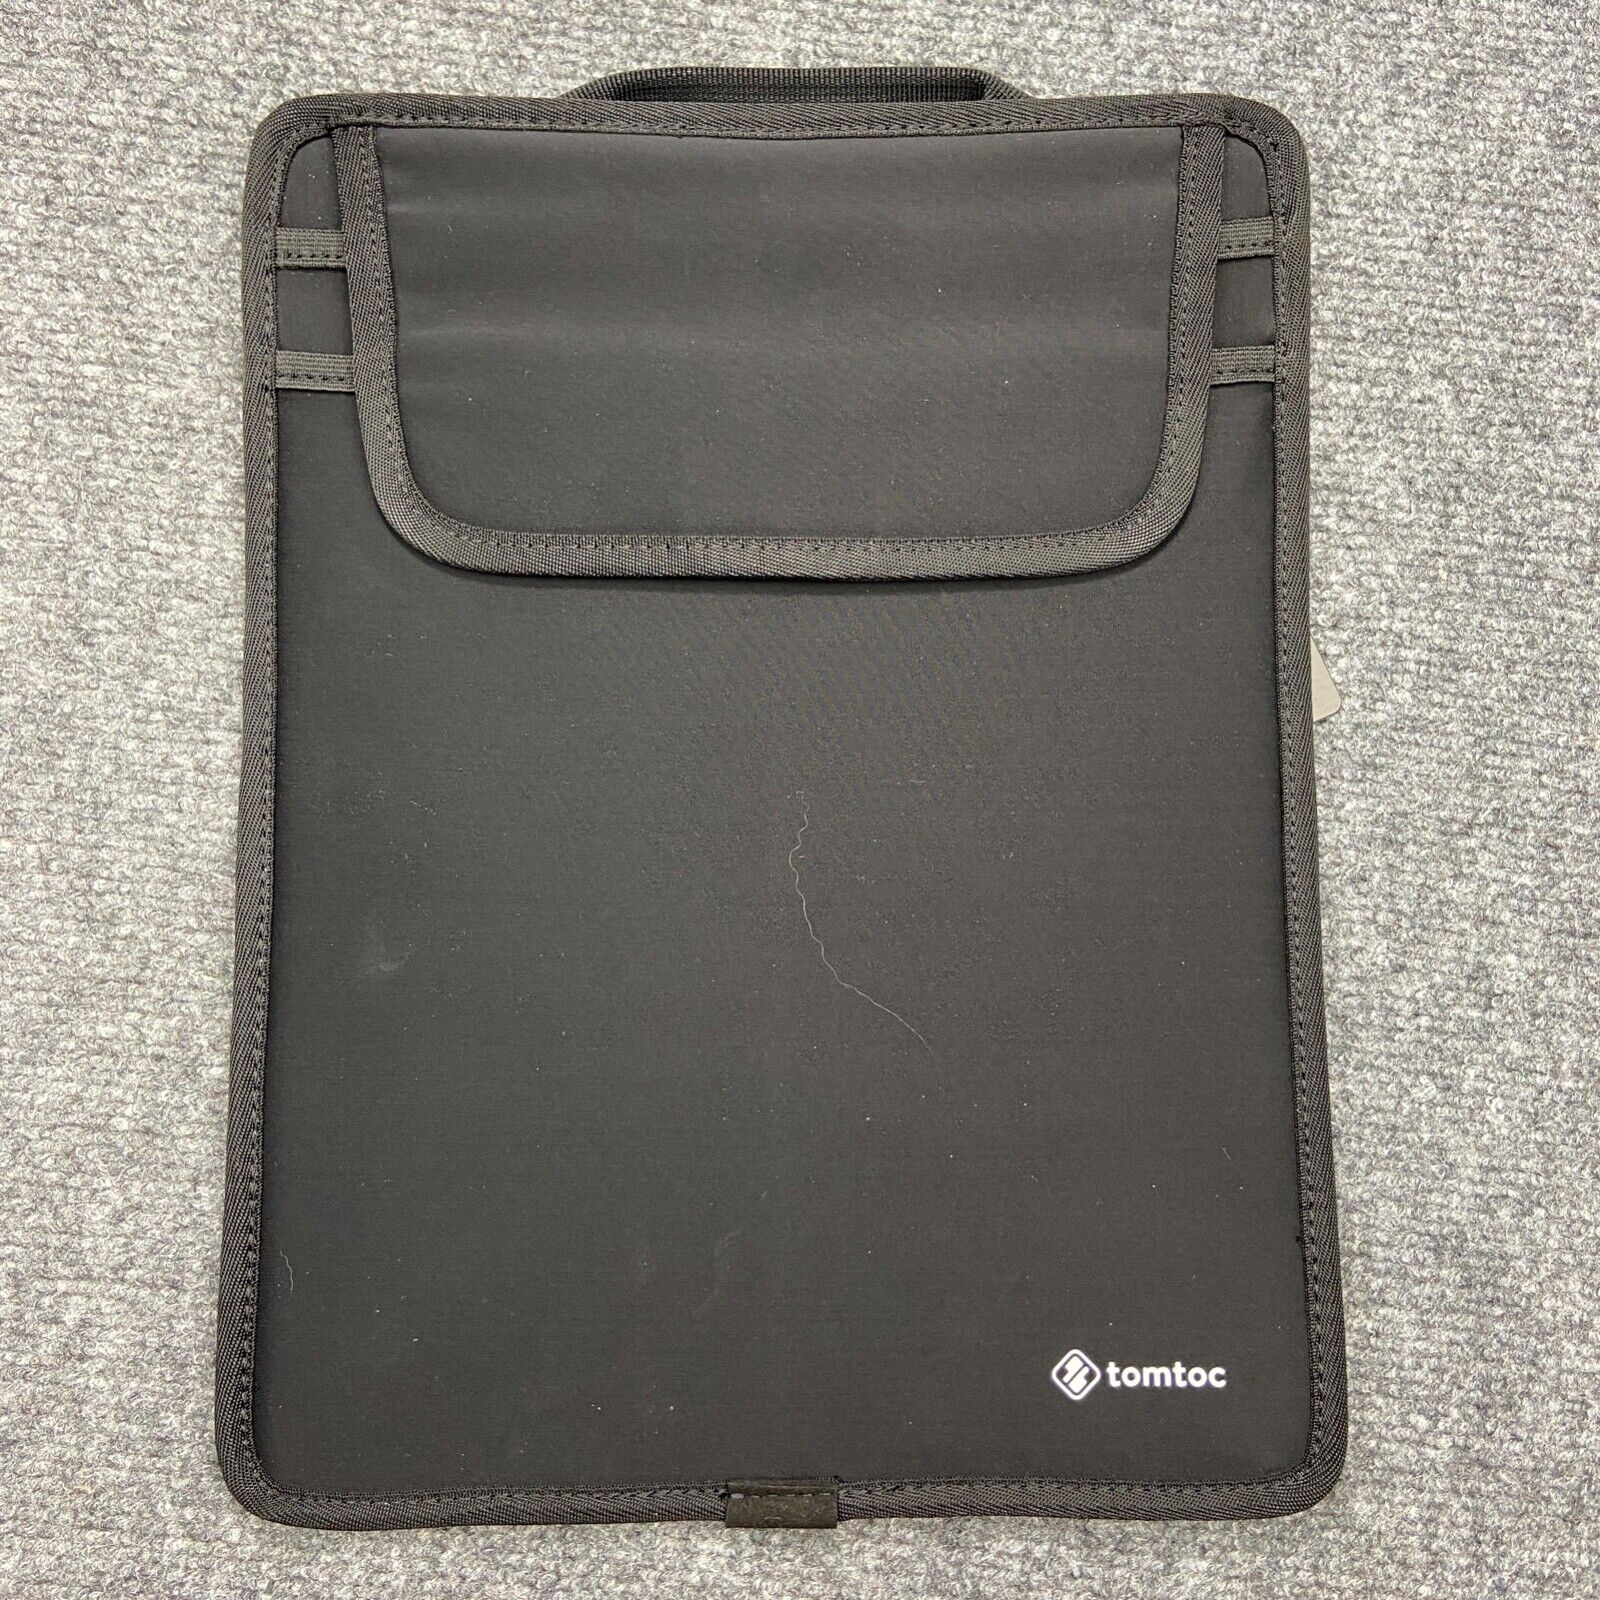 New Tomtoc 360 Protective Laptop Carrying Bag Laptop Tablet Black A10-C02D